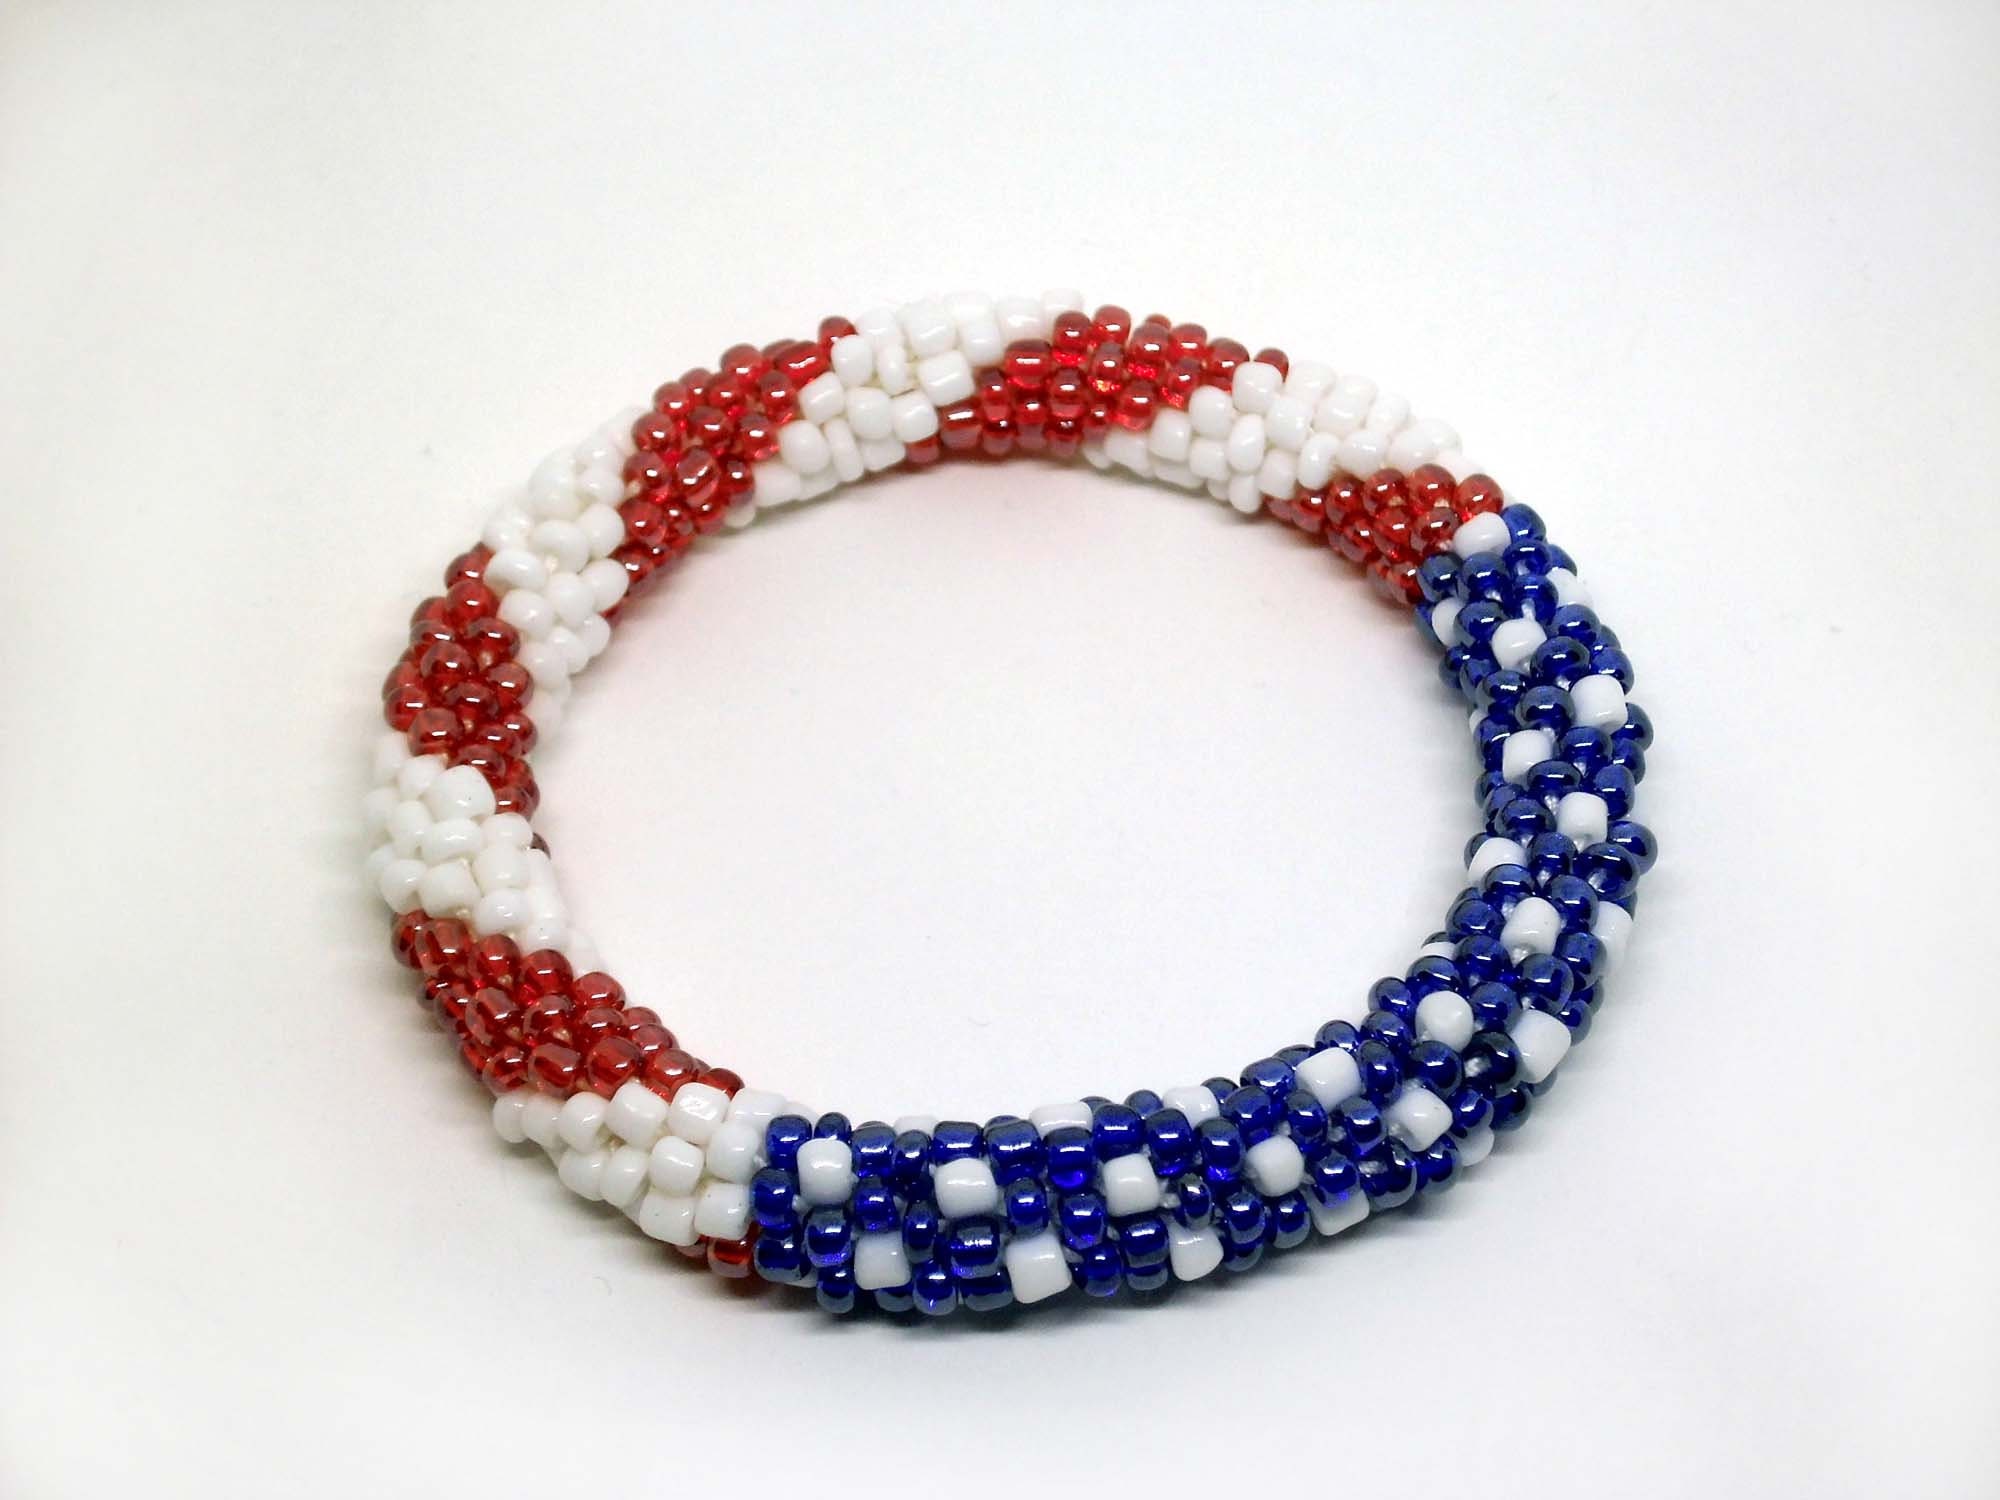 Assorted American Flag Friendship Beads Bracelet Jewelry